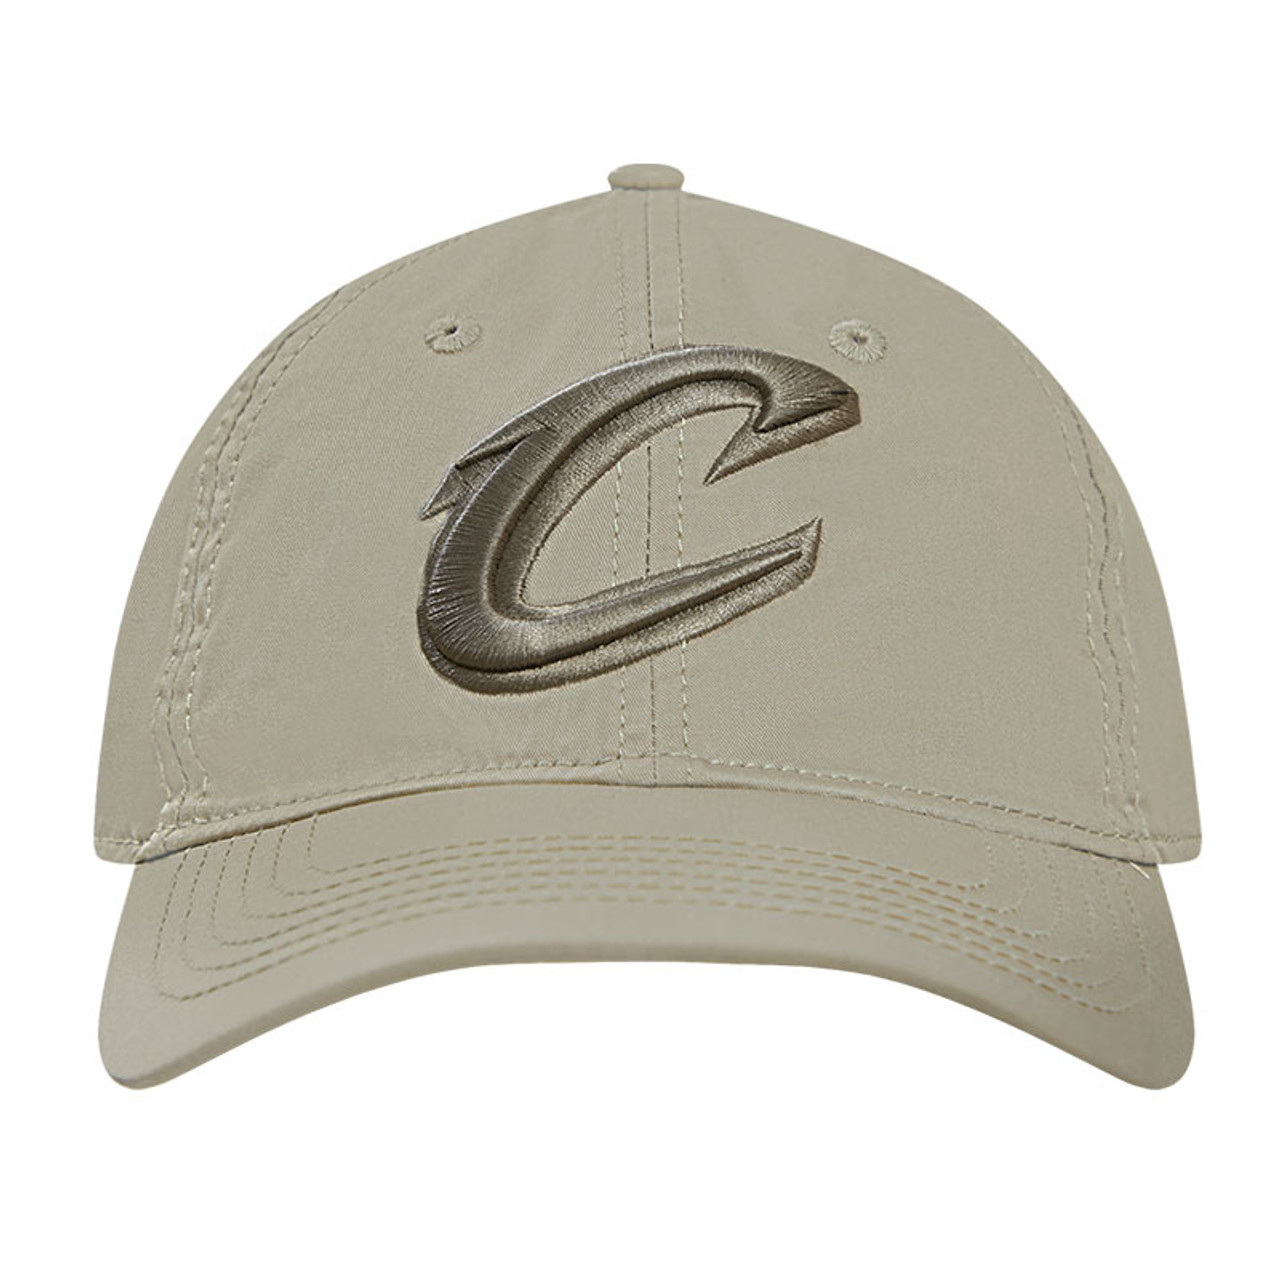 Cleveland Cavaliers Dad Hats, Cavaliers Strapback Cap